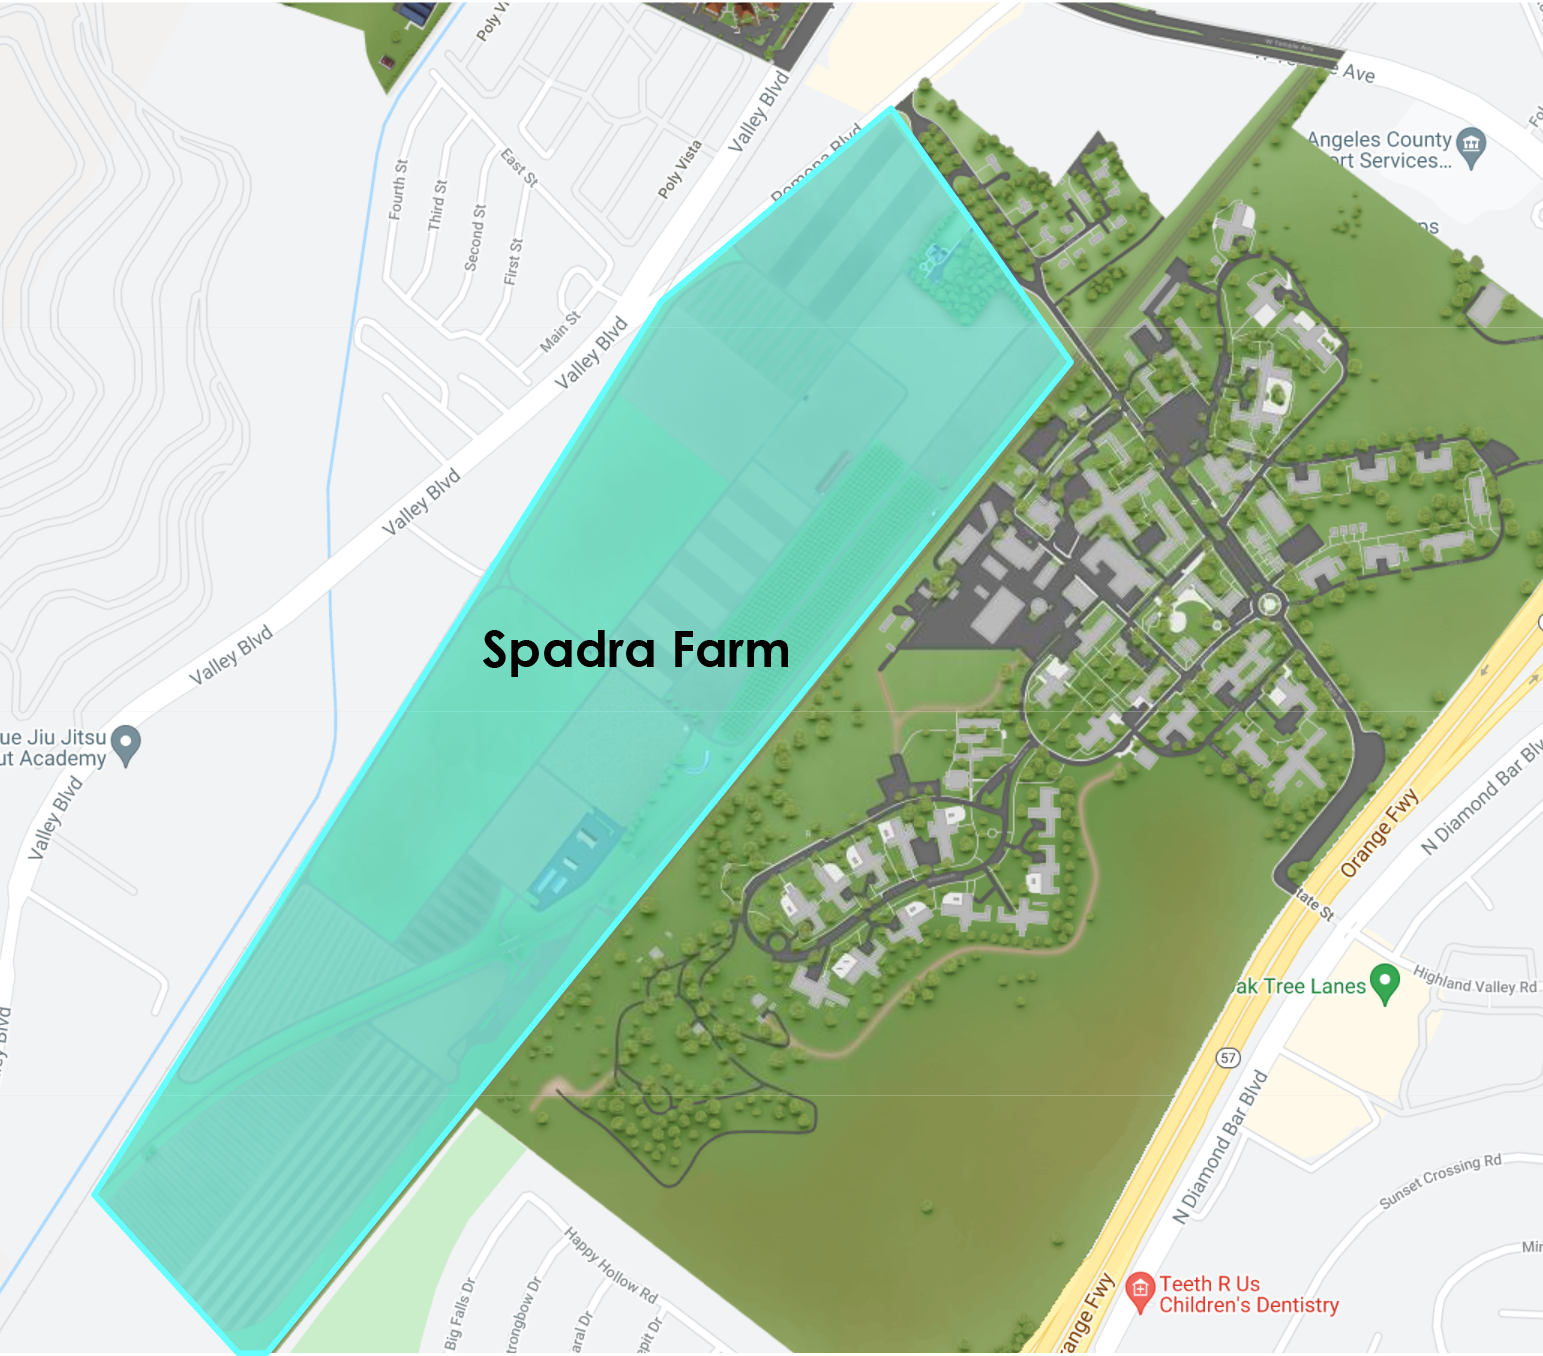 Map of Spadra Farm location